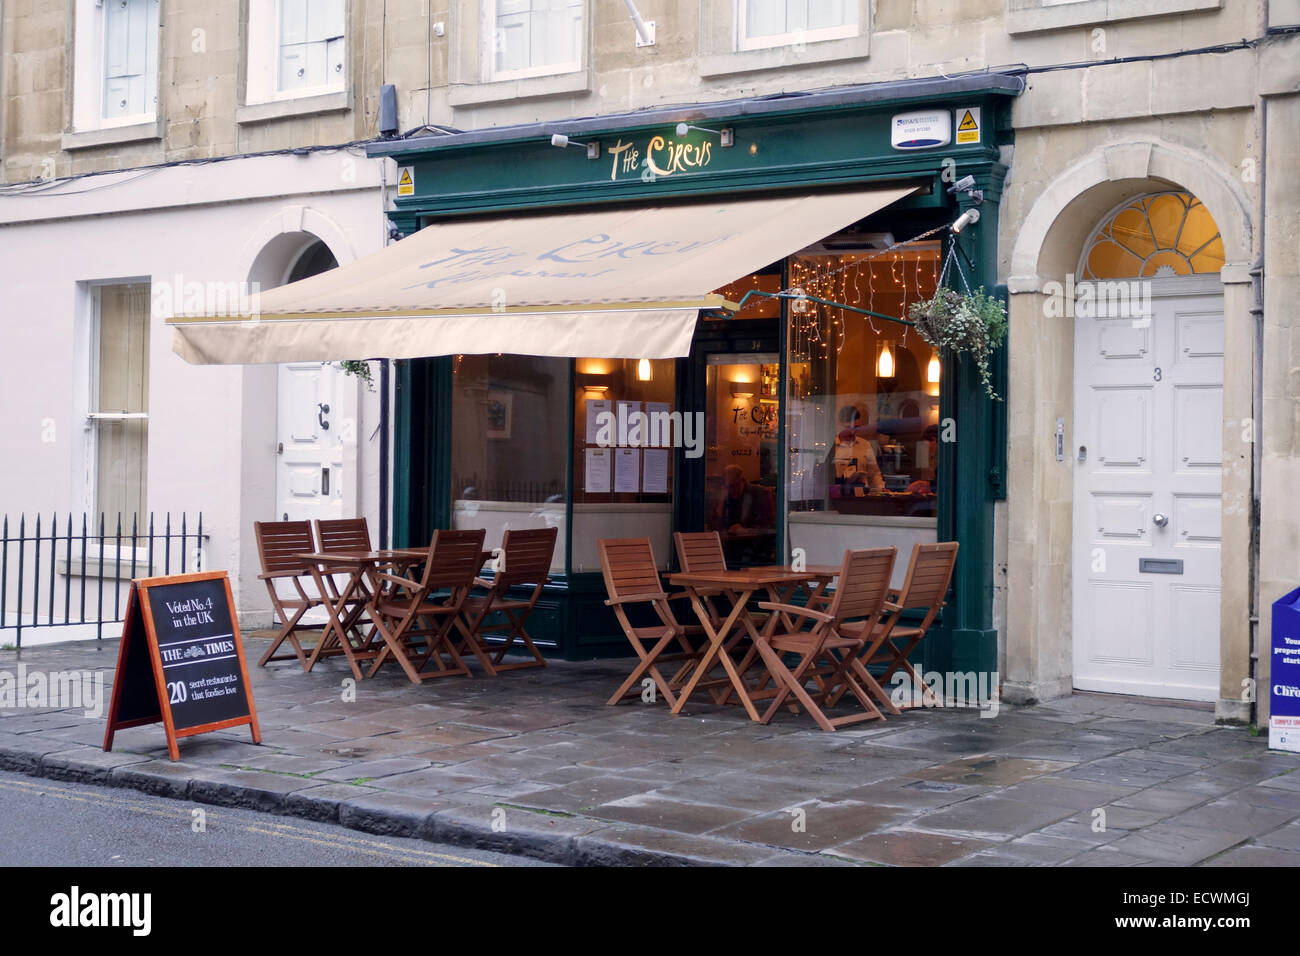 The Circus Cafe and Restaurant, Brock Street, City of Bath, England, UK Stock Photo